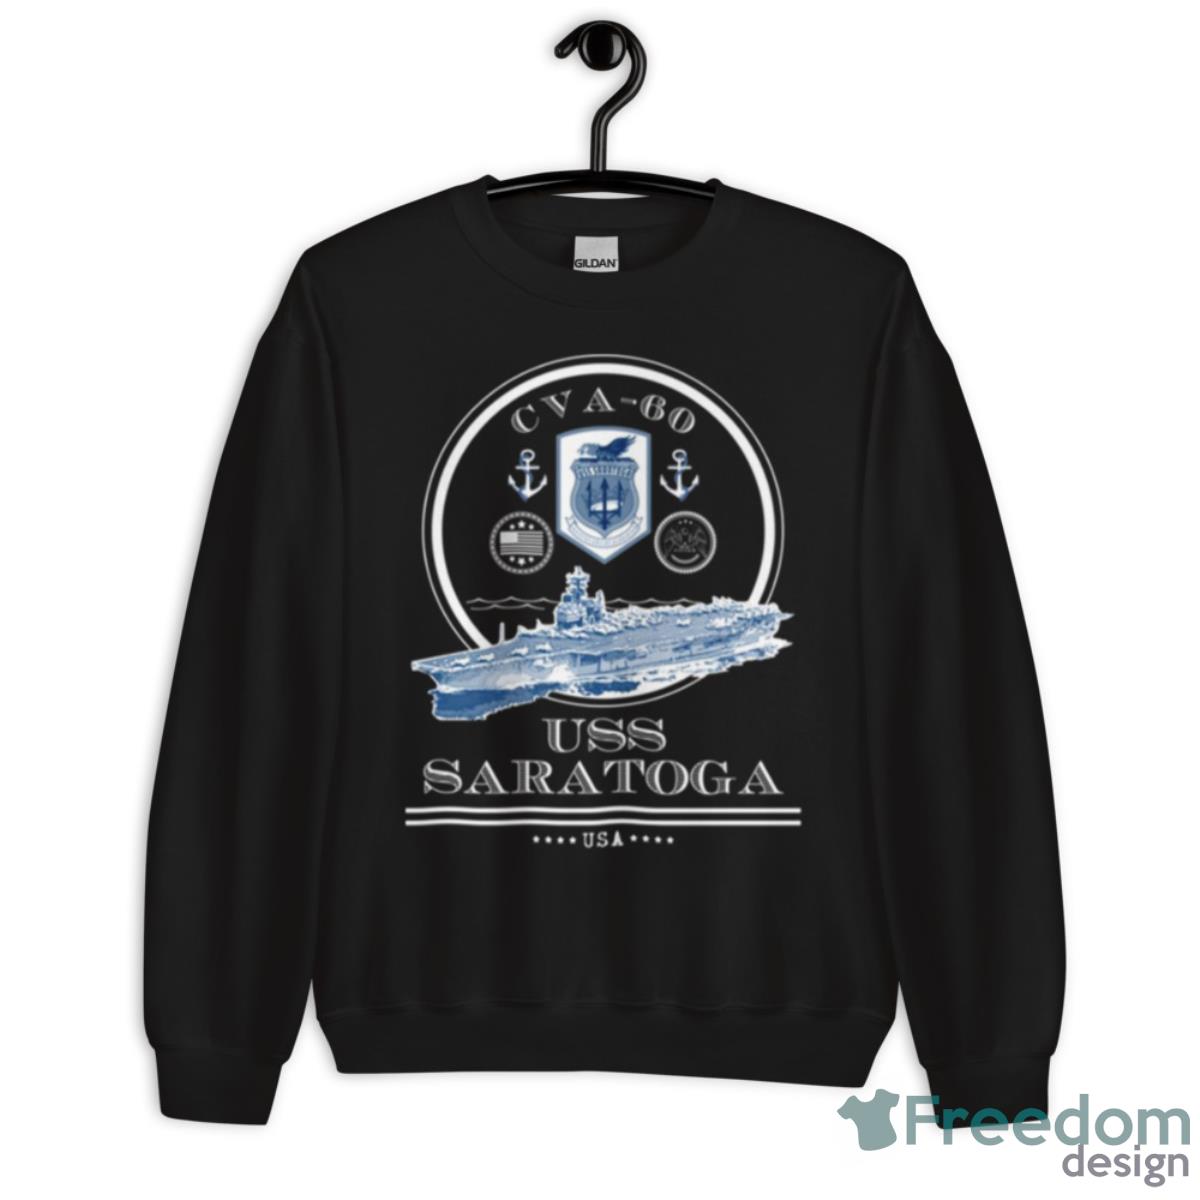 Uss Saratoga Cva 60 Naval Ship Military Aircraft Carrier shirt